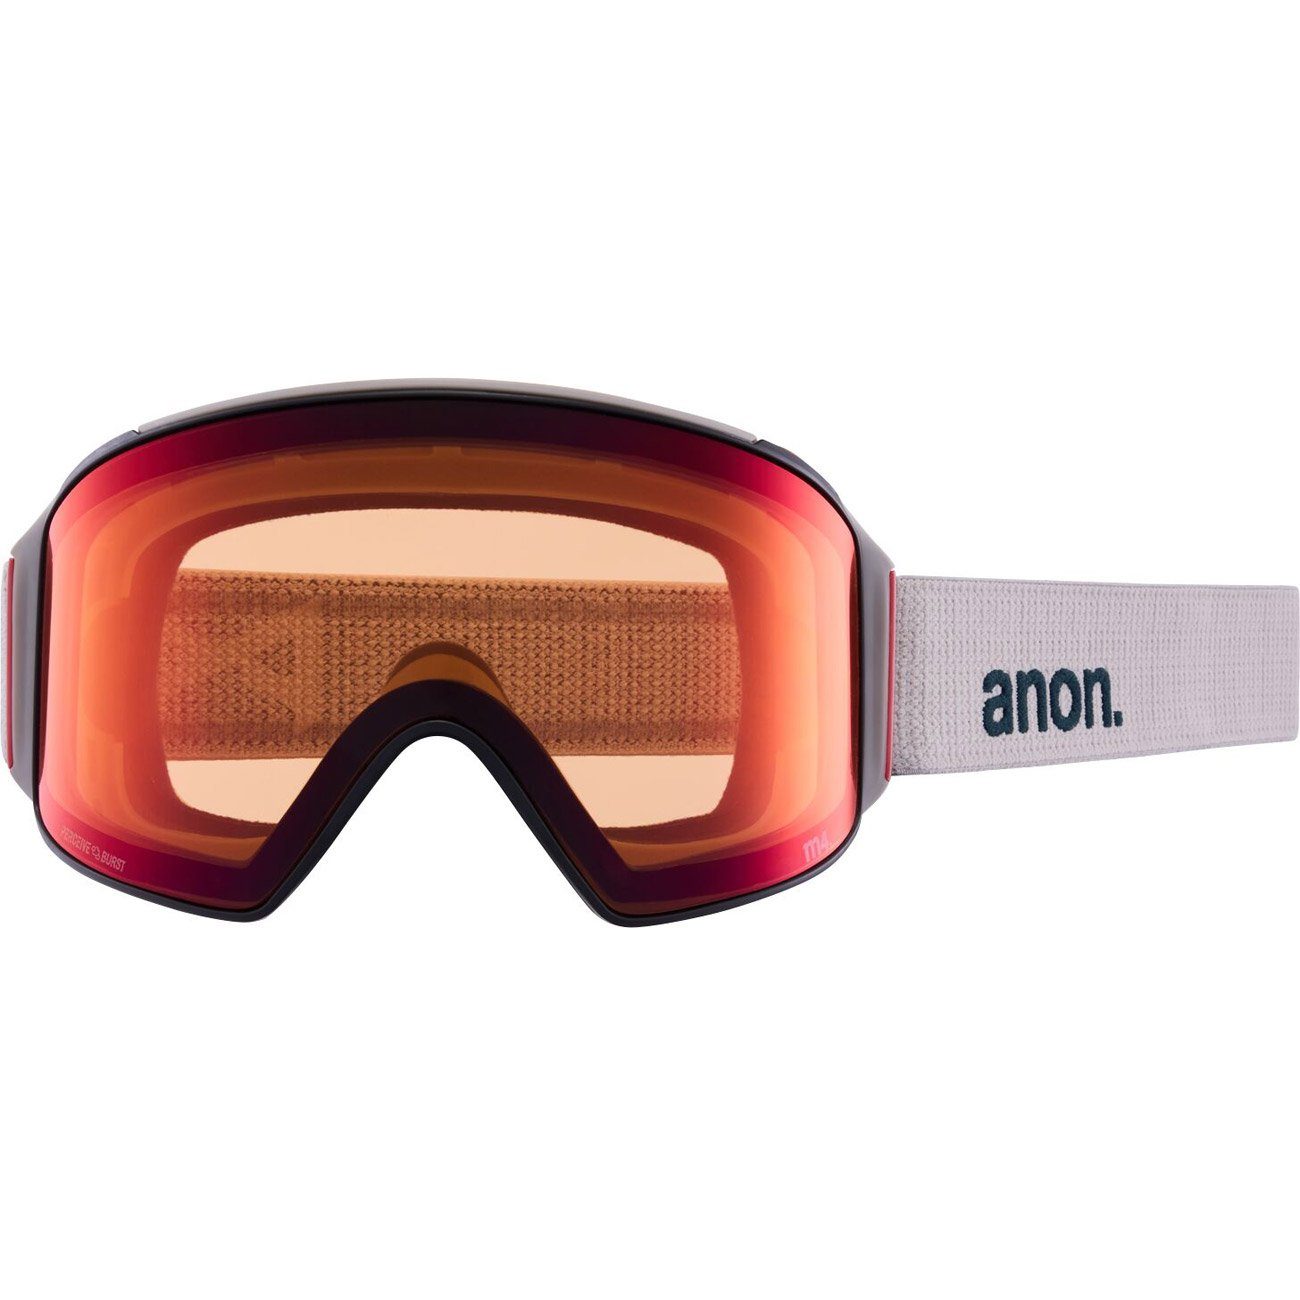 wrmgry/prcv Snowboardbrille, brnz sun M4 CYLINDRICAL Anon